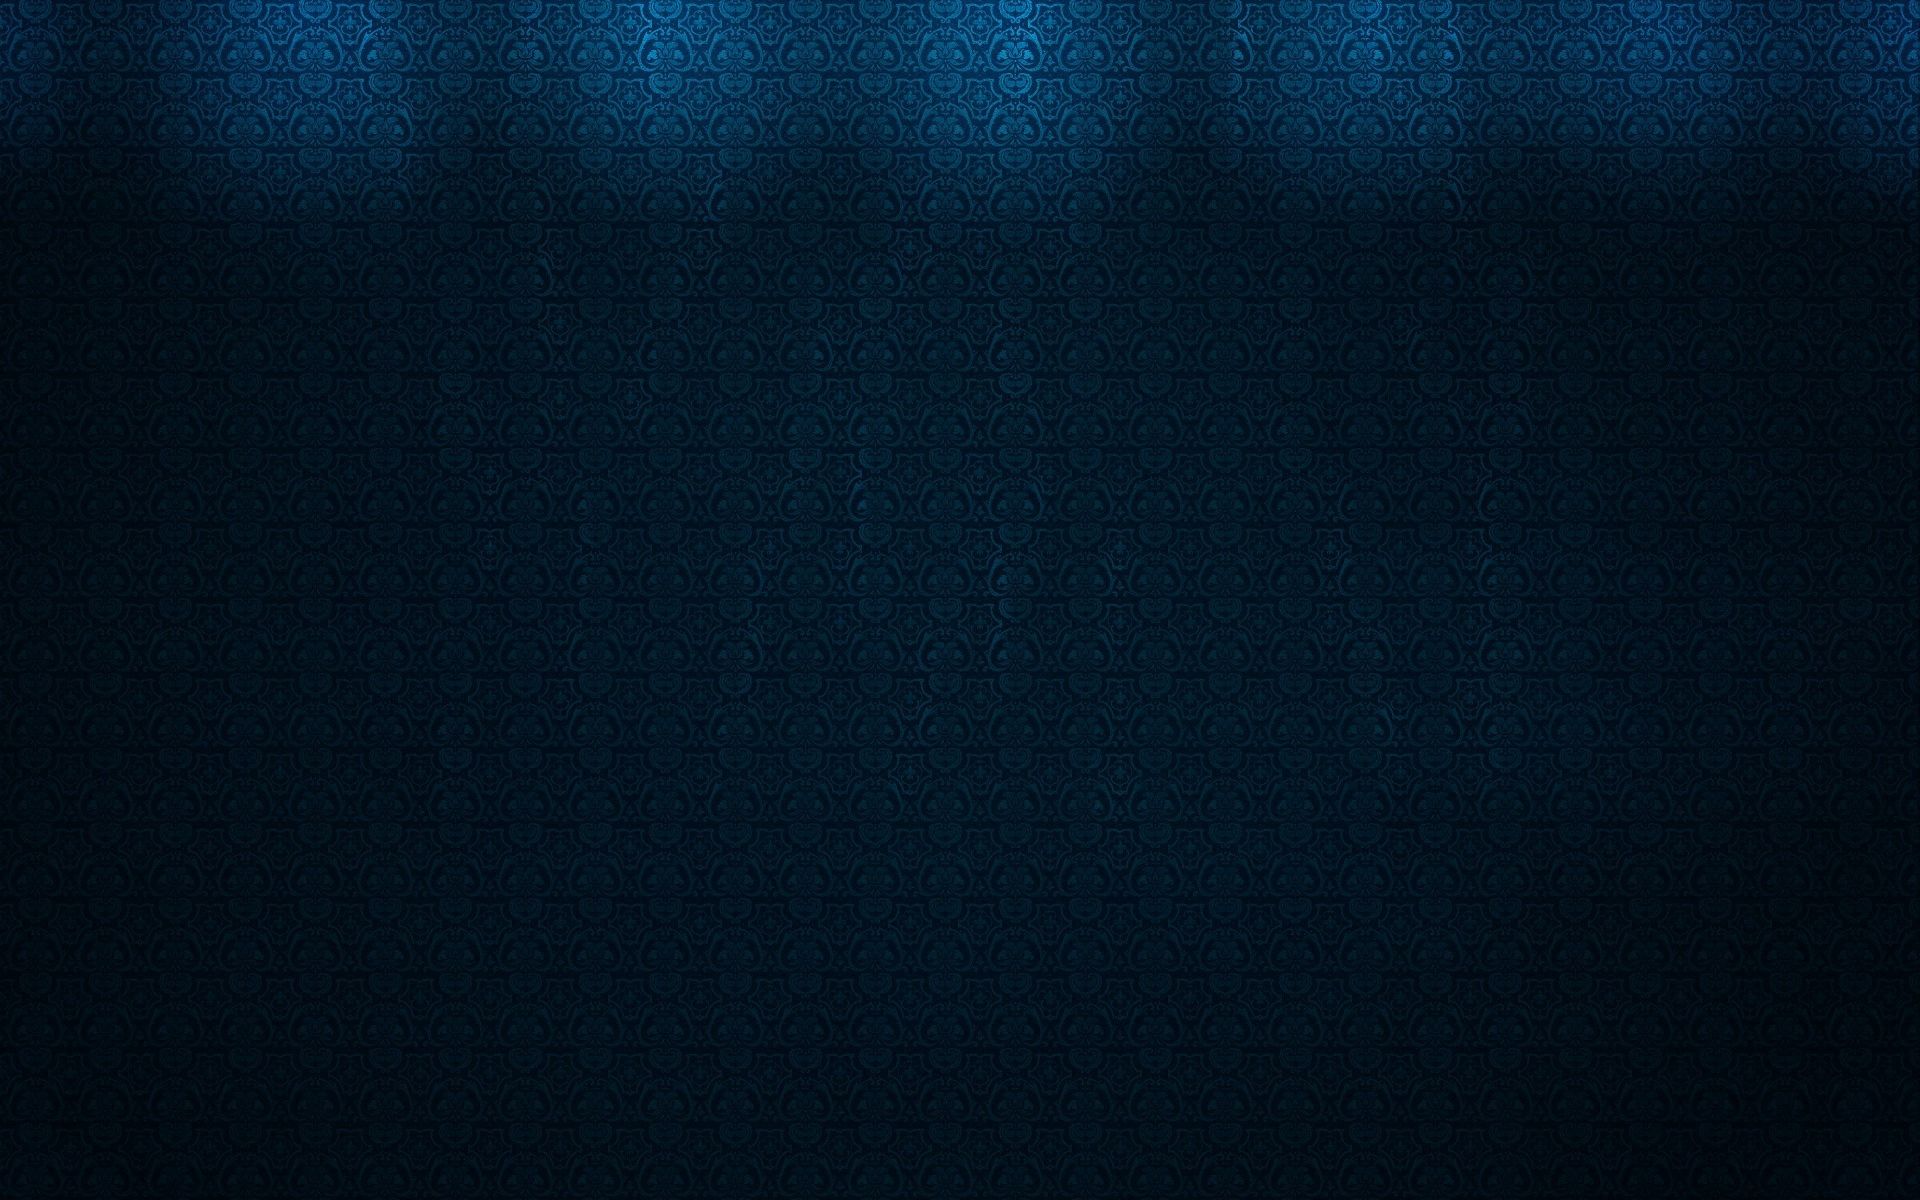 Download wallpaper 1920x1200 patterns, background, dark, spots hd ...